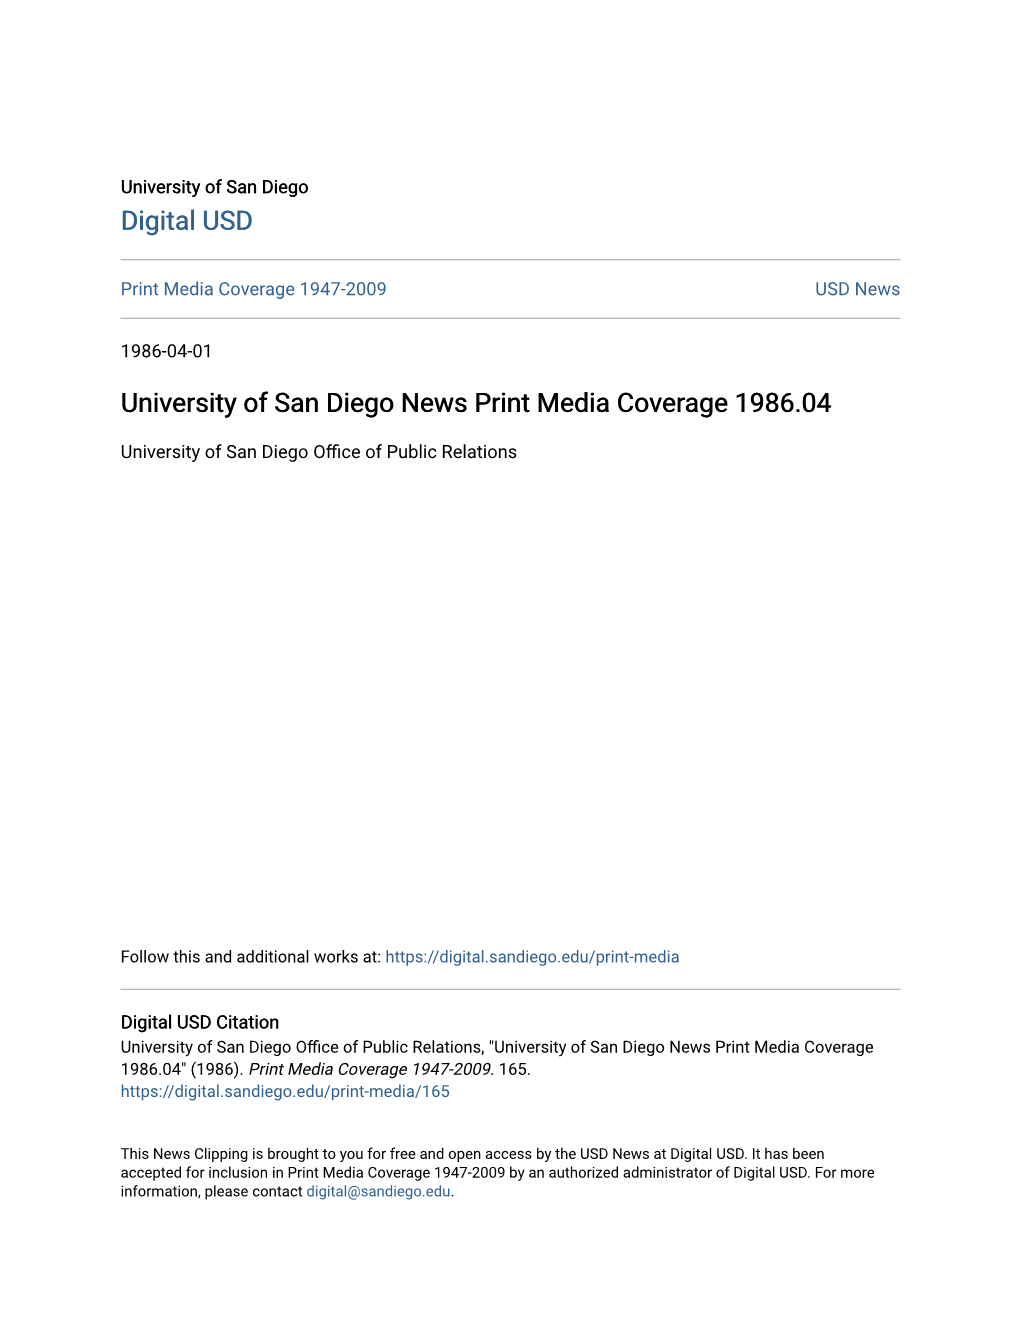 University of San Diego News Print Media Coverage 1986.04